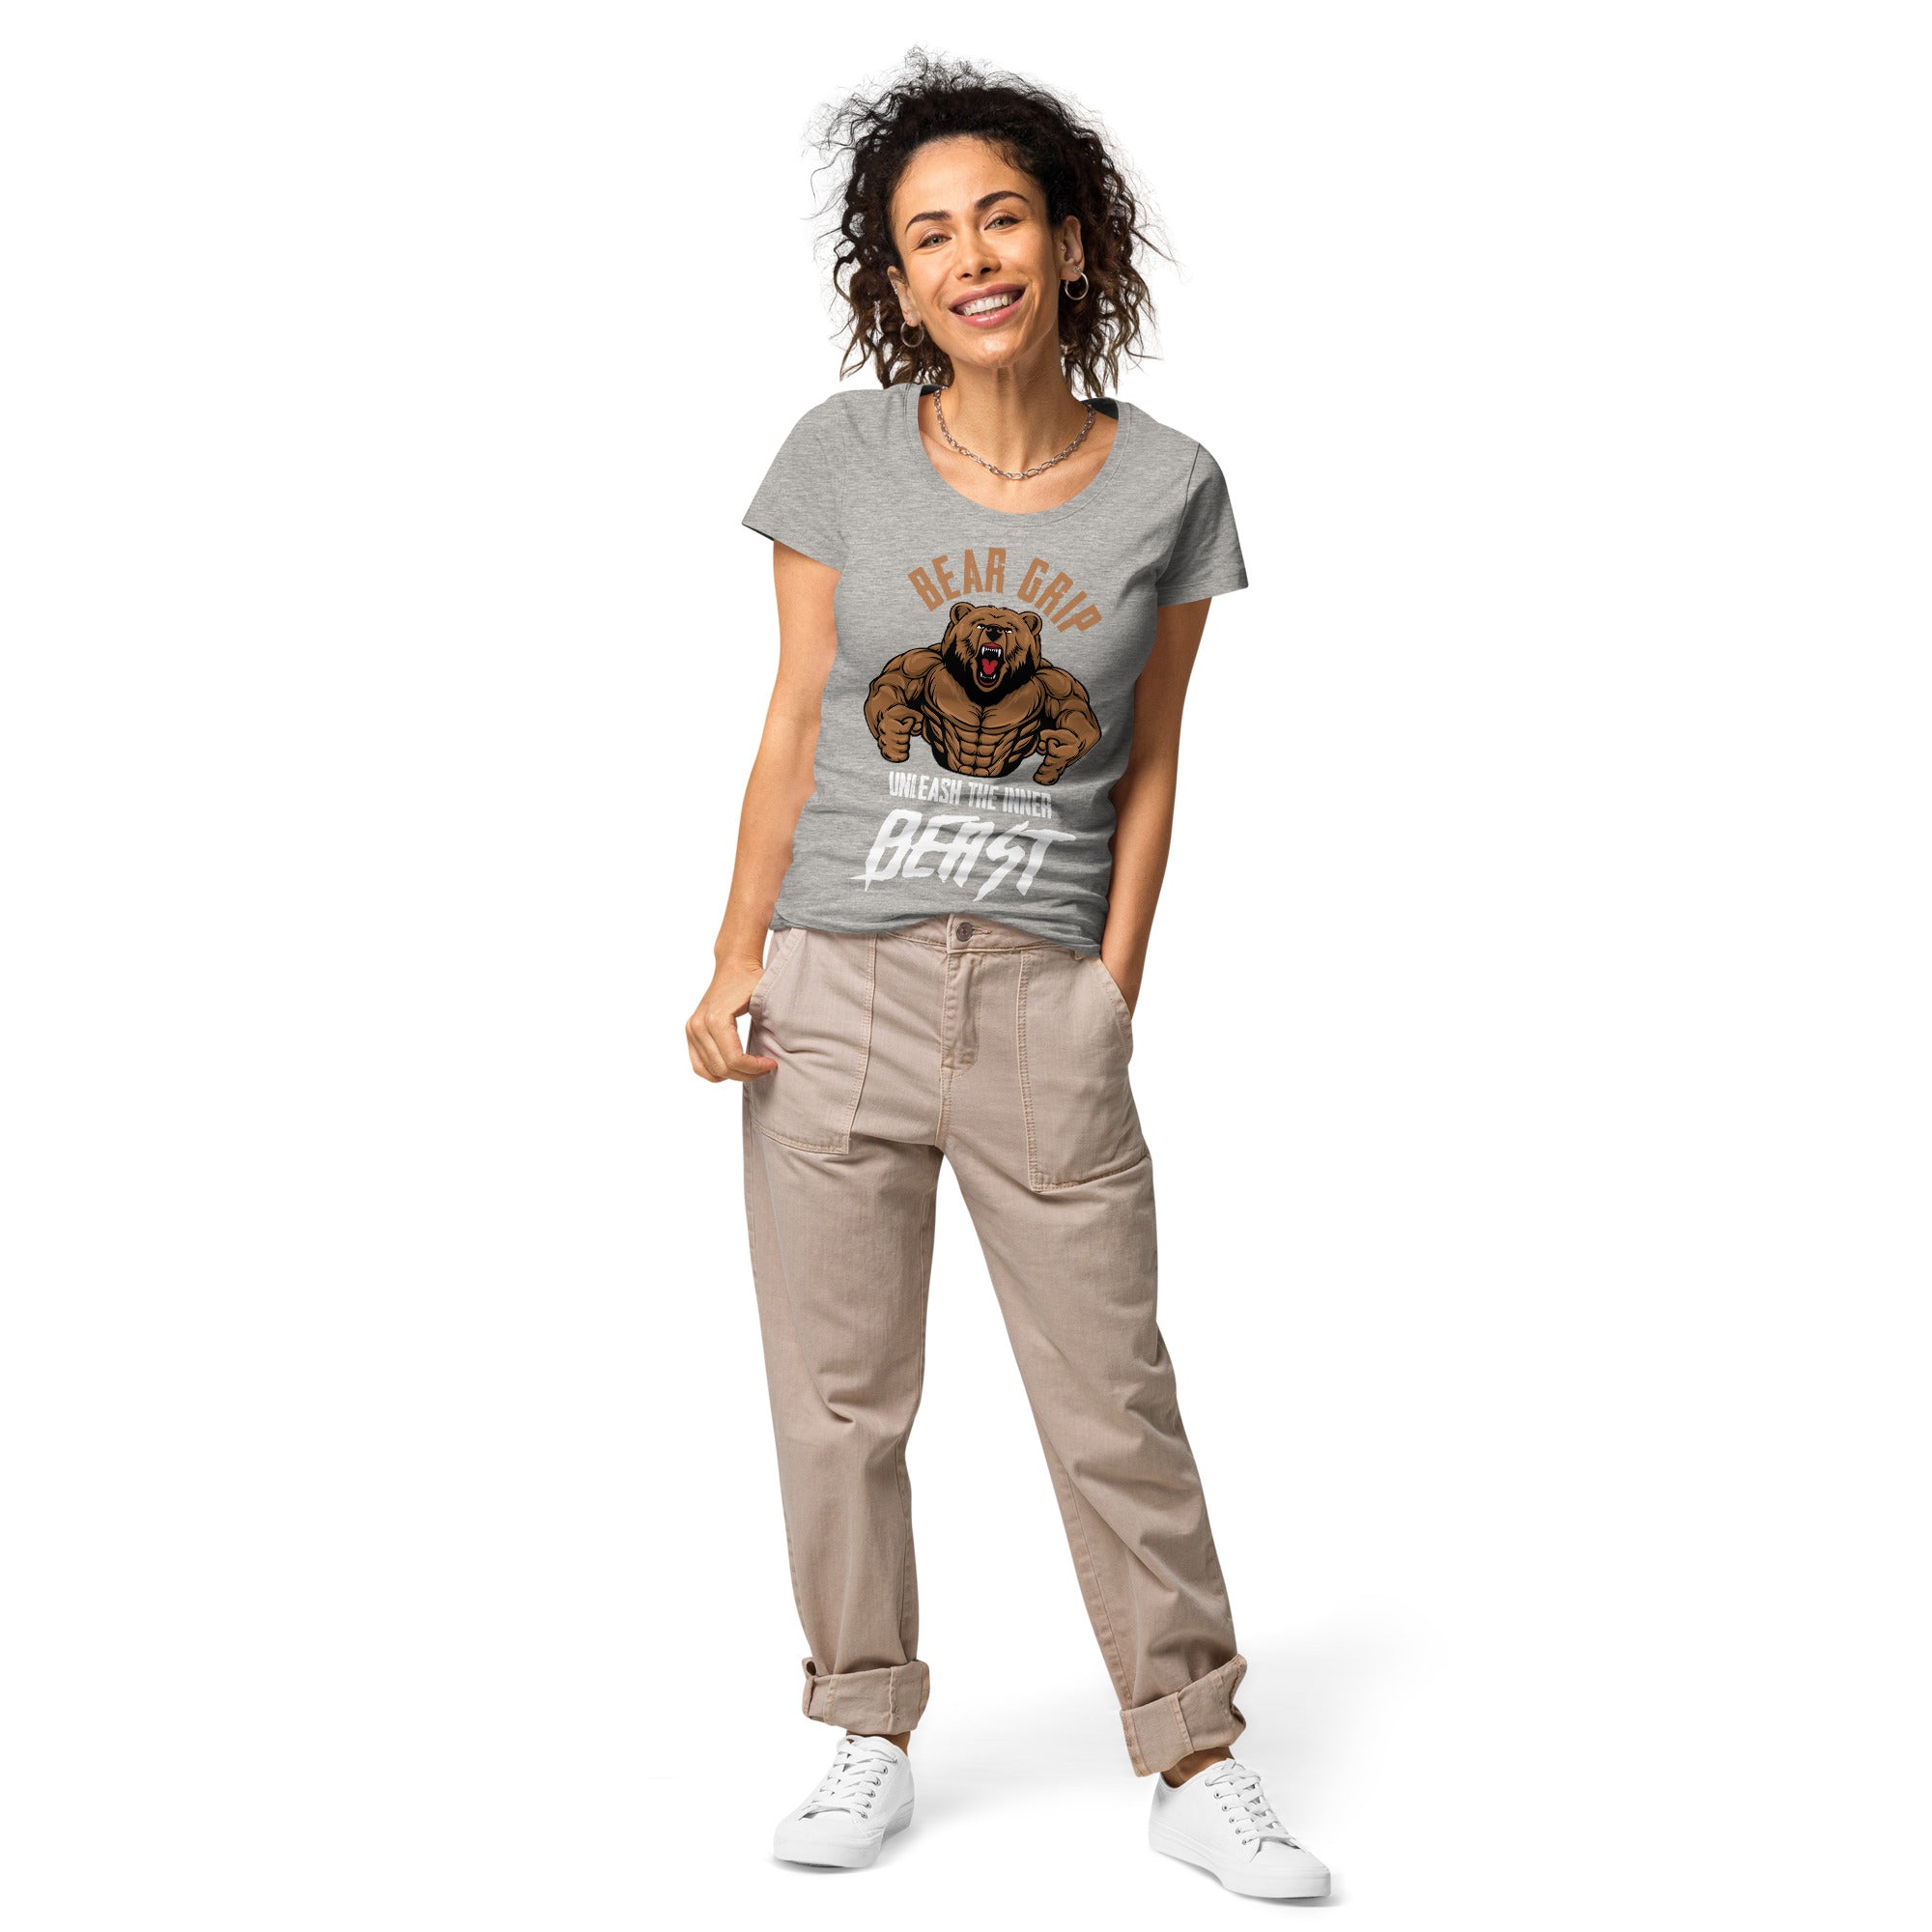 BEAR GRIP - Women’s basic organic t-shirt (Unleash The Inner Beast)